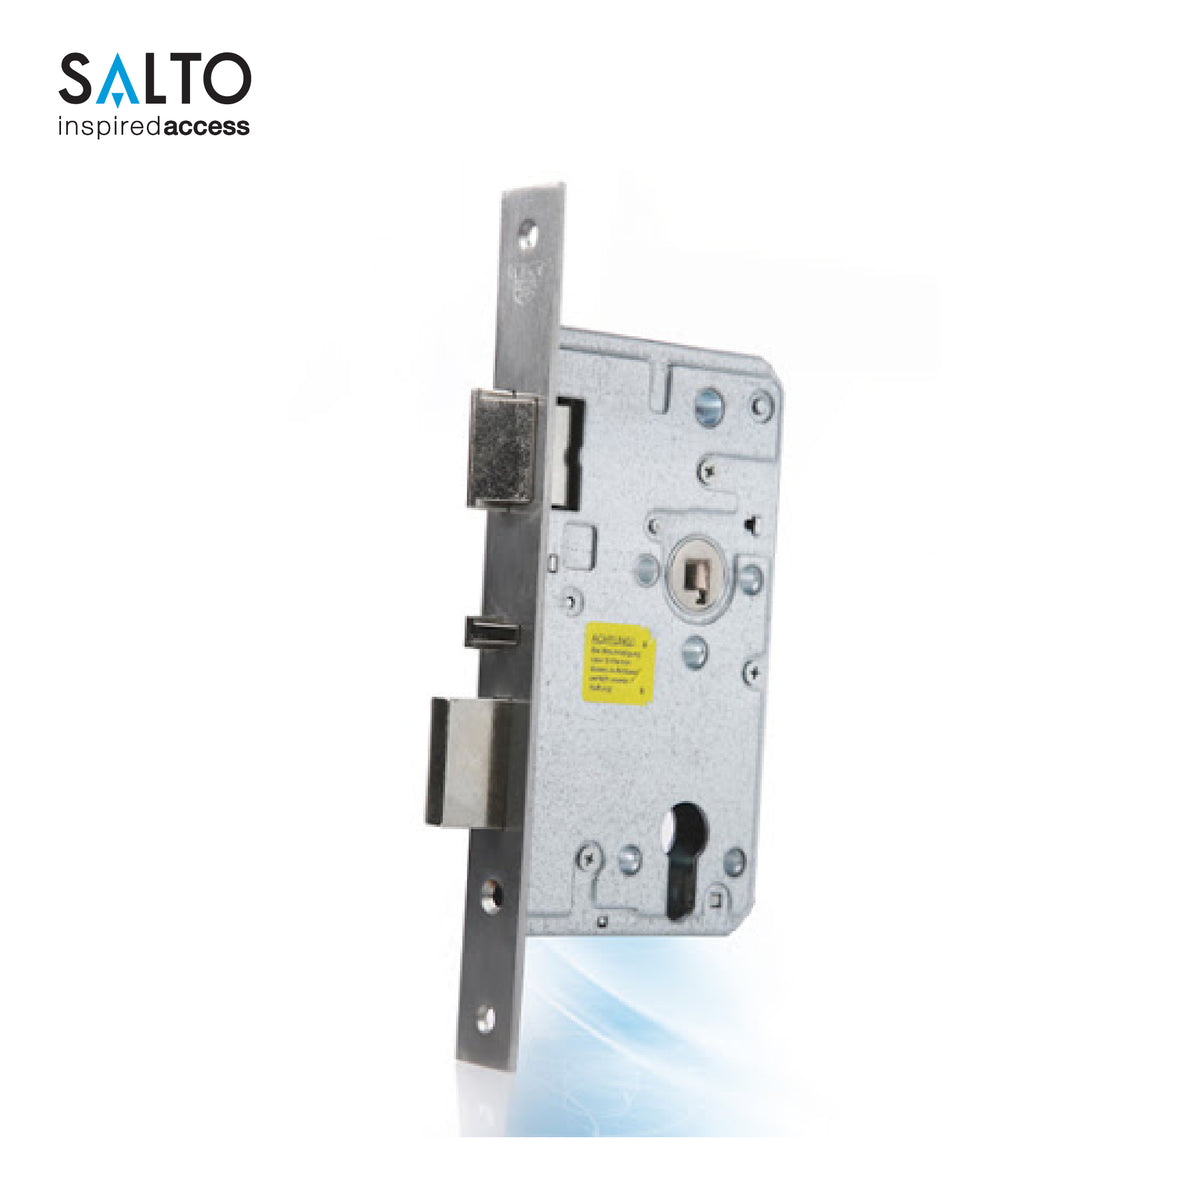 Salto access control Sri Lanka - XS4 Mortise locks